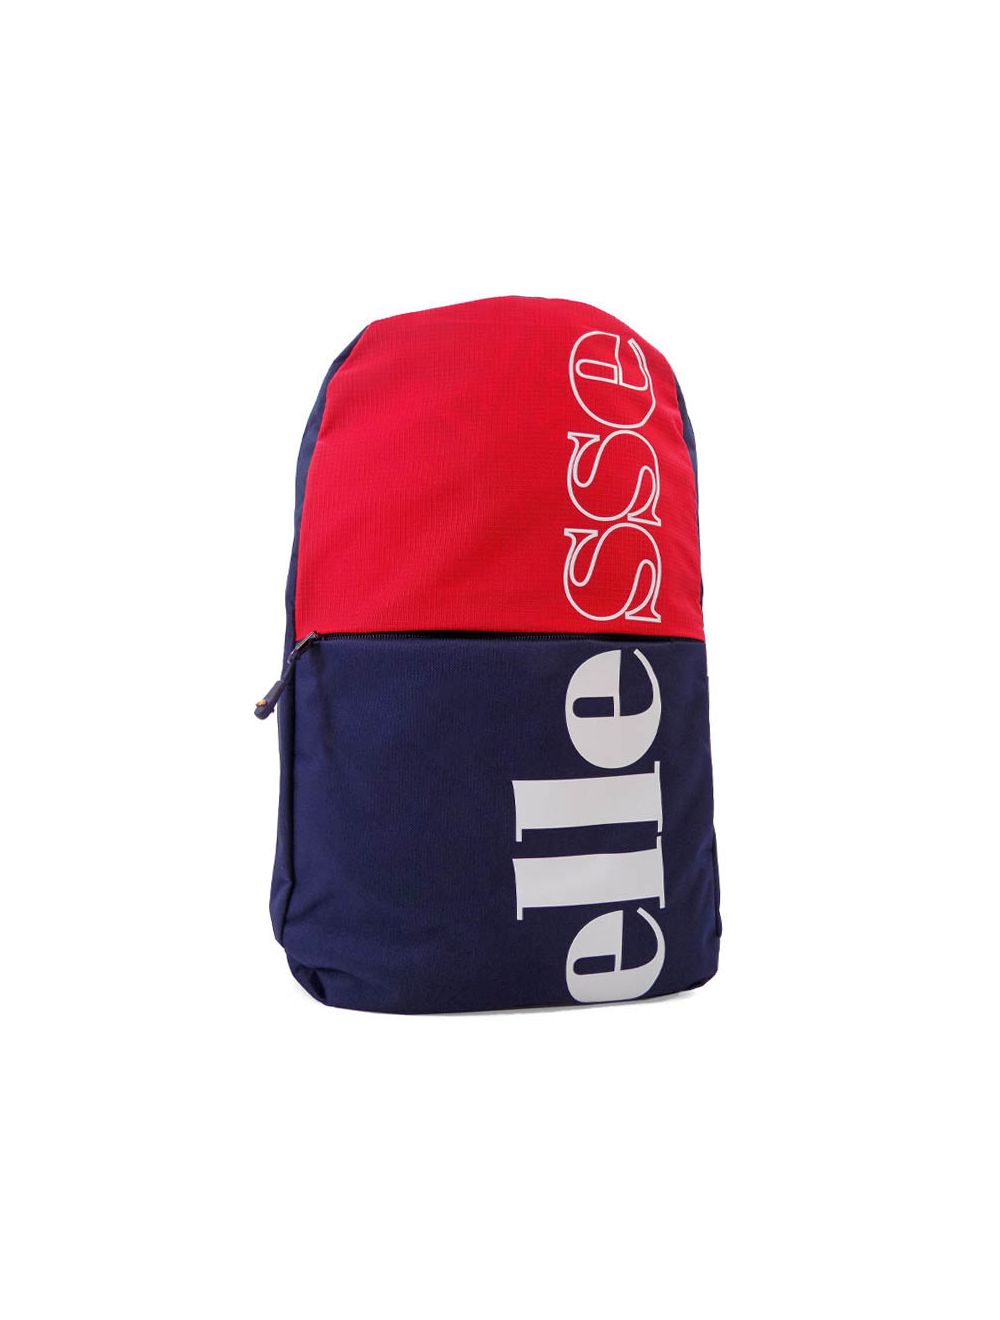 Shop ellesse Bags and Backpacks